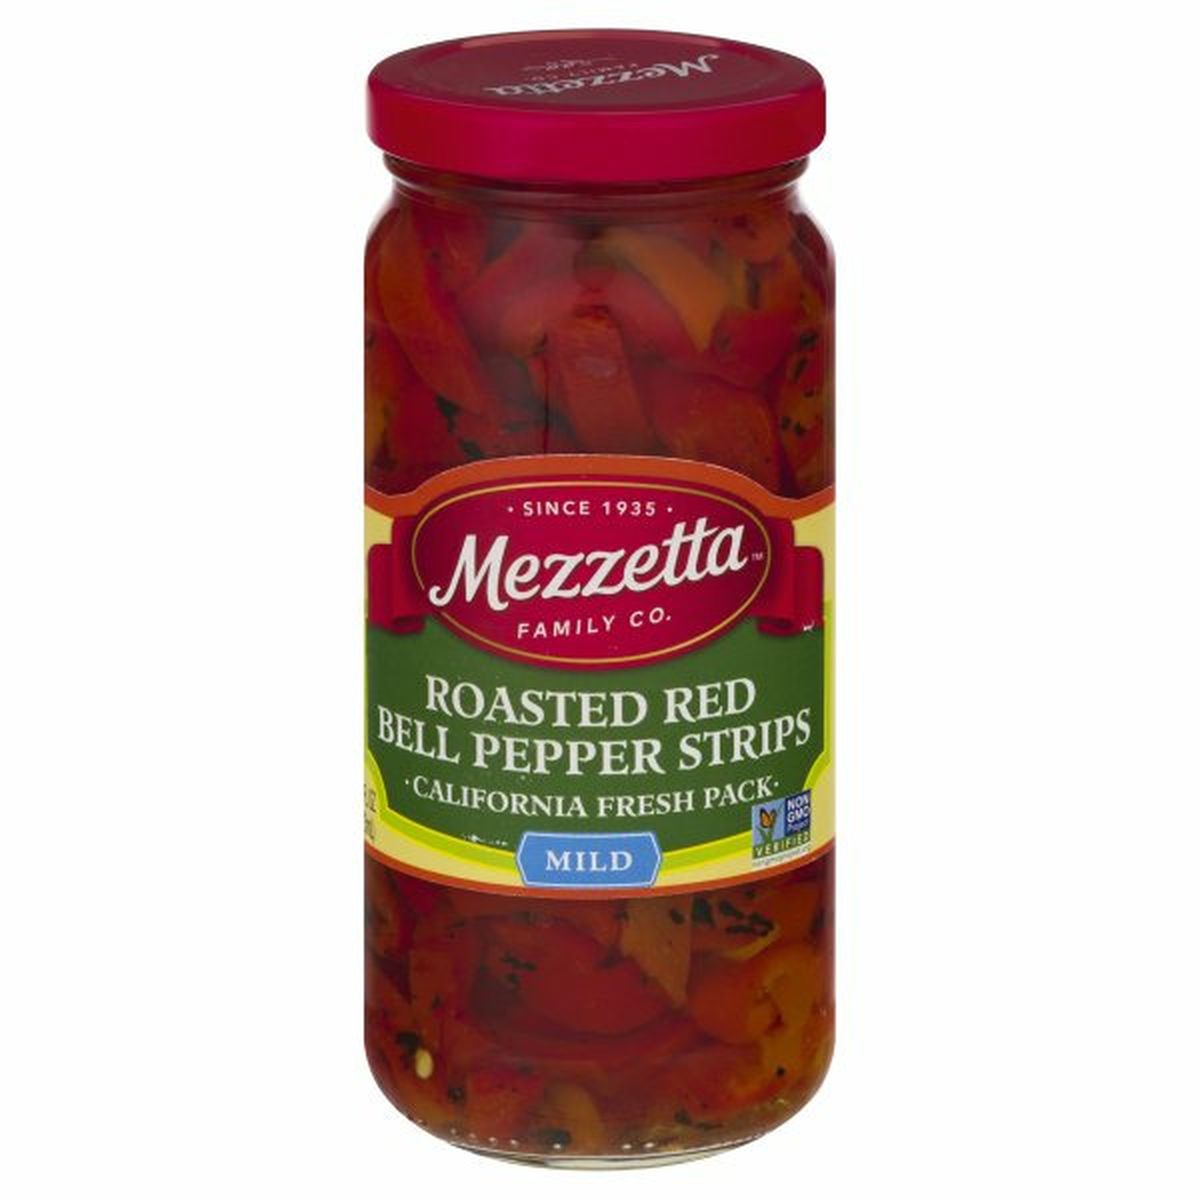 Calories in Mezzetta Bell Pepper Strips, Roasted Red, Mild